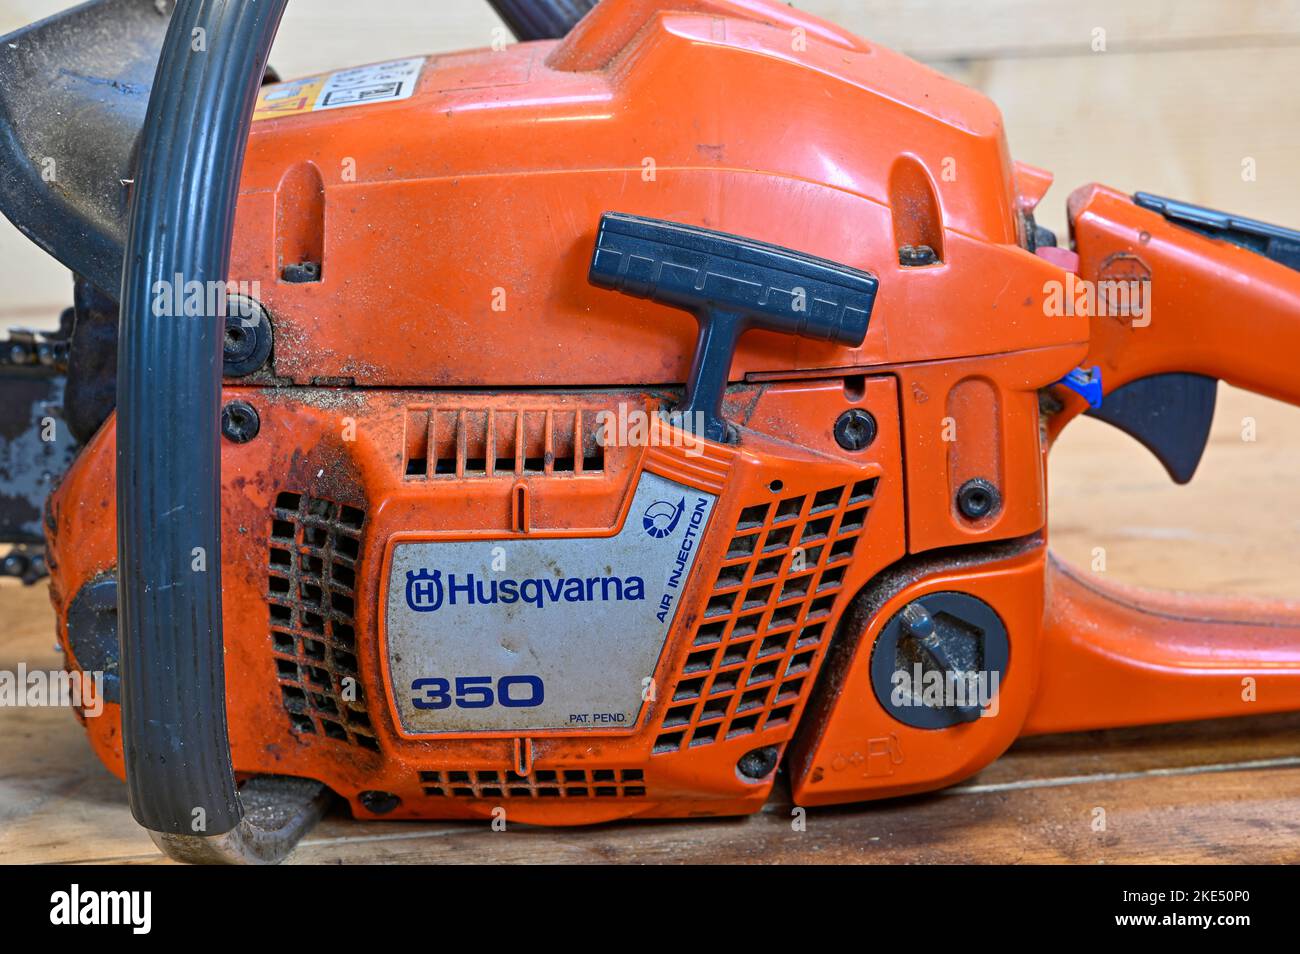 Orange chainsaw Husqvarna 350 standing on wooden workbench Stock Photo